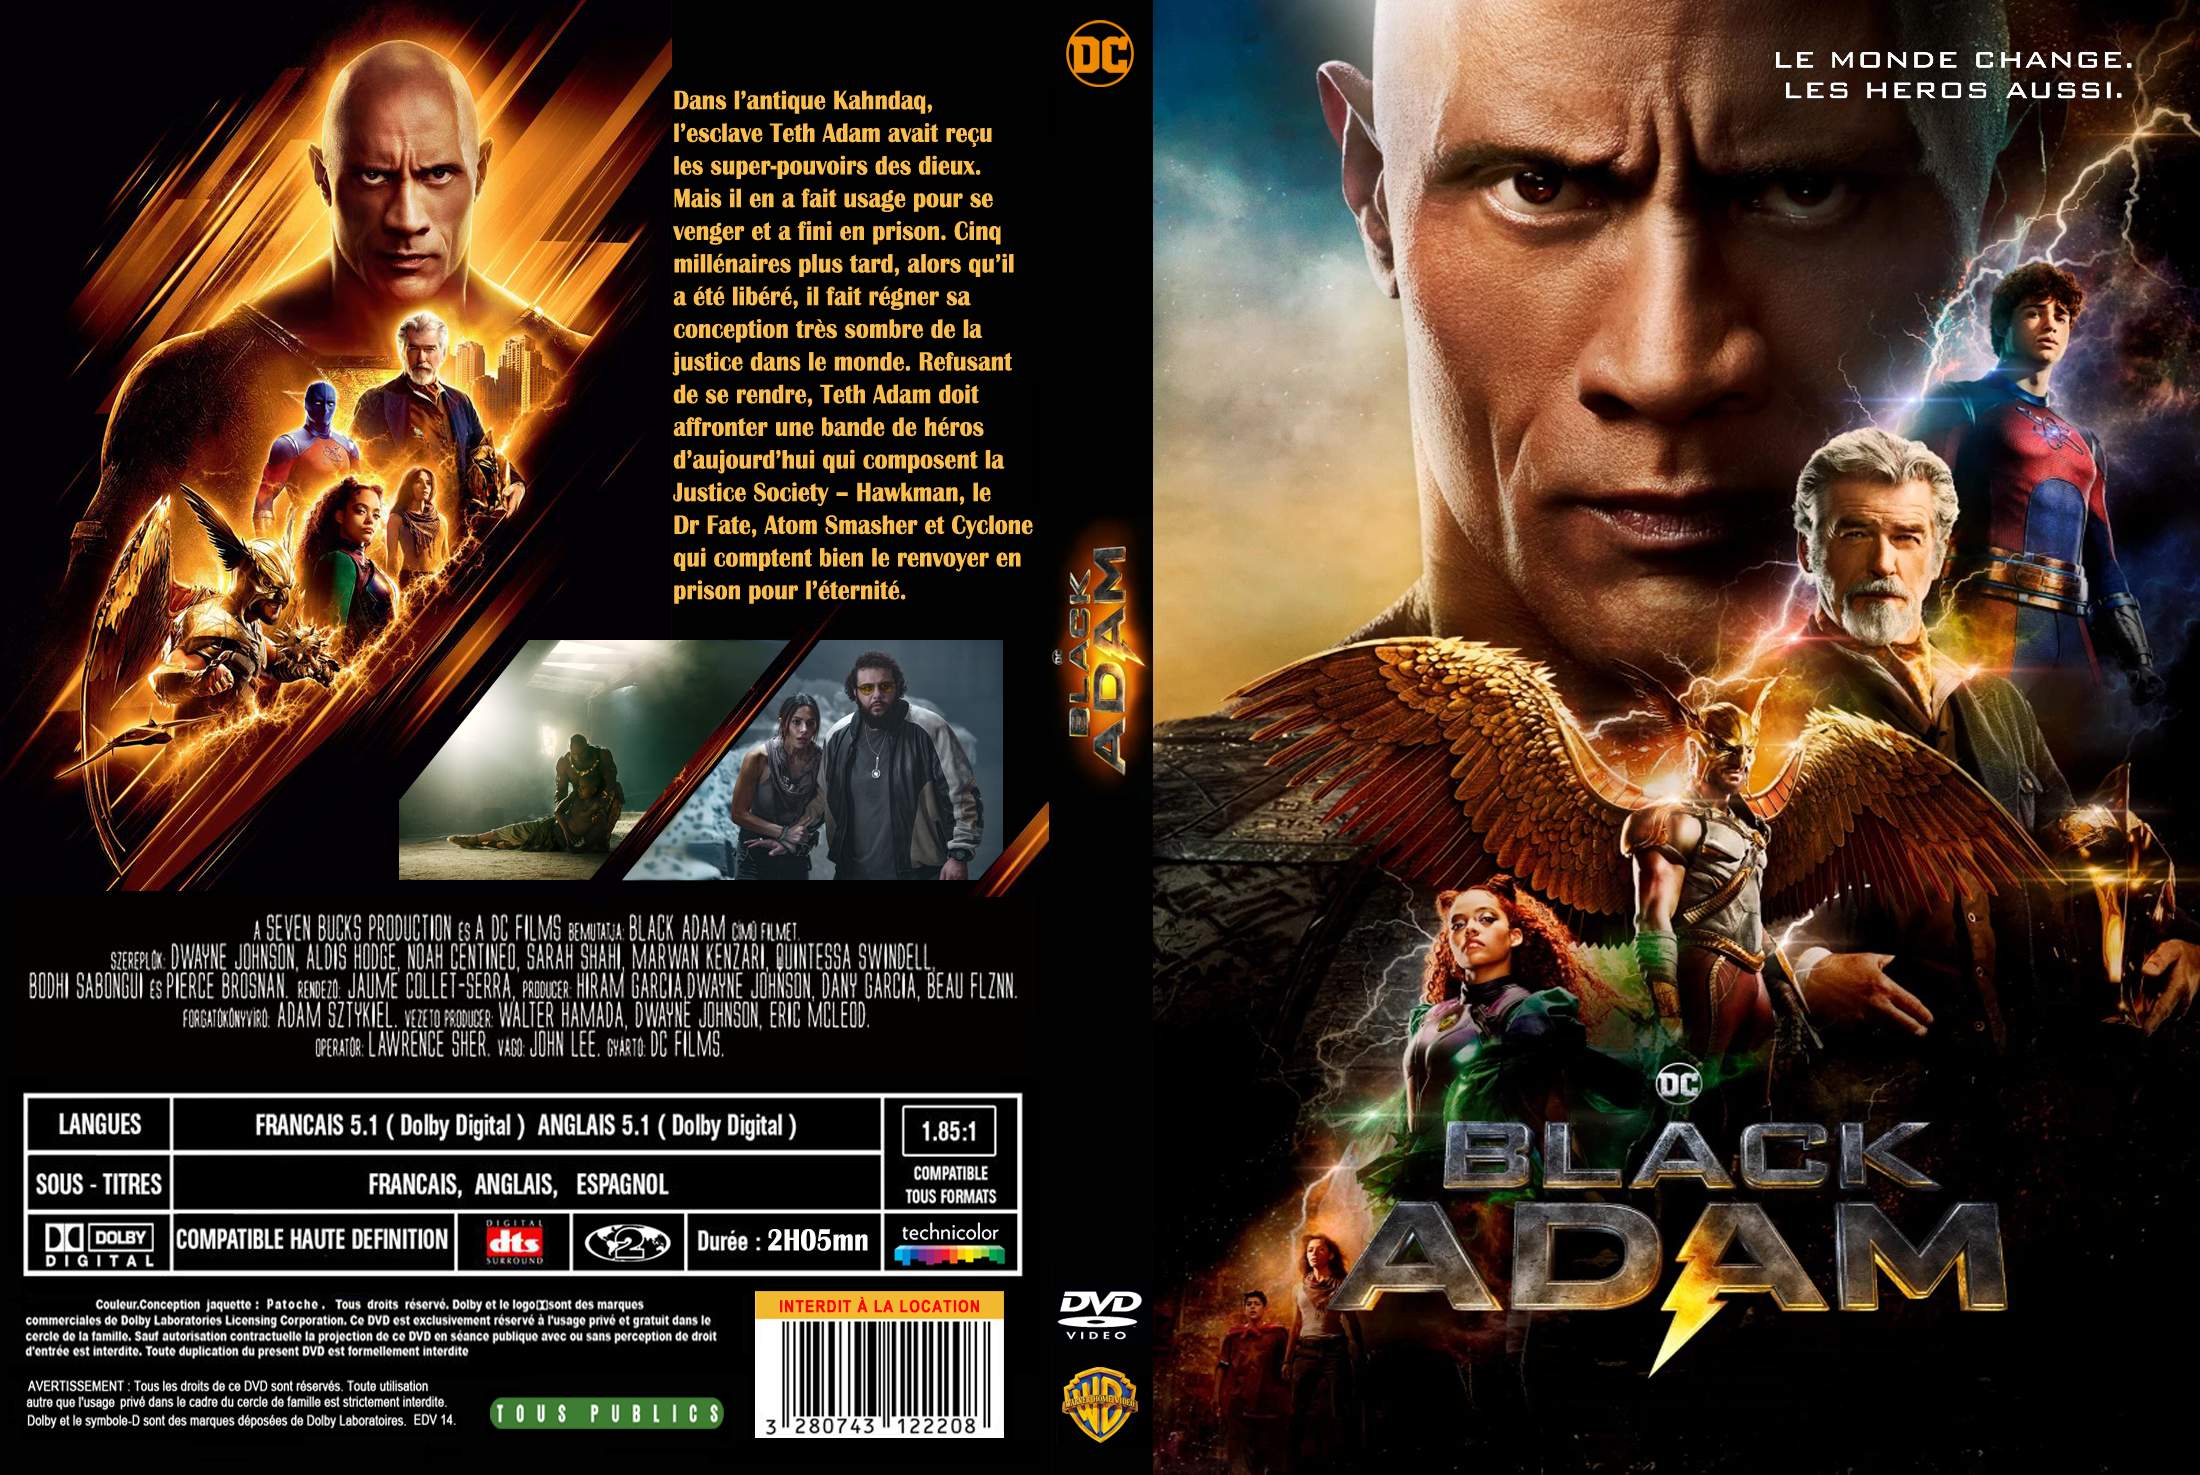 Jaquette DVD Black Adam custom v2